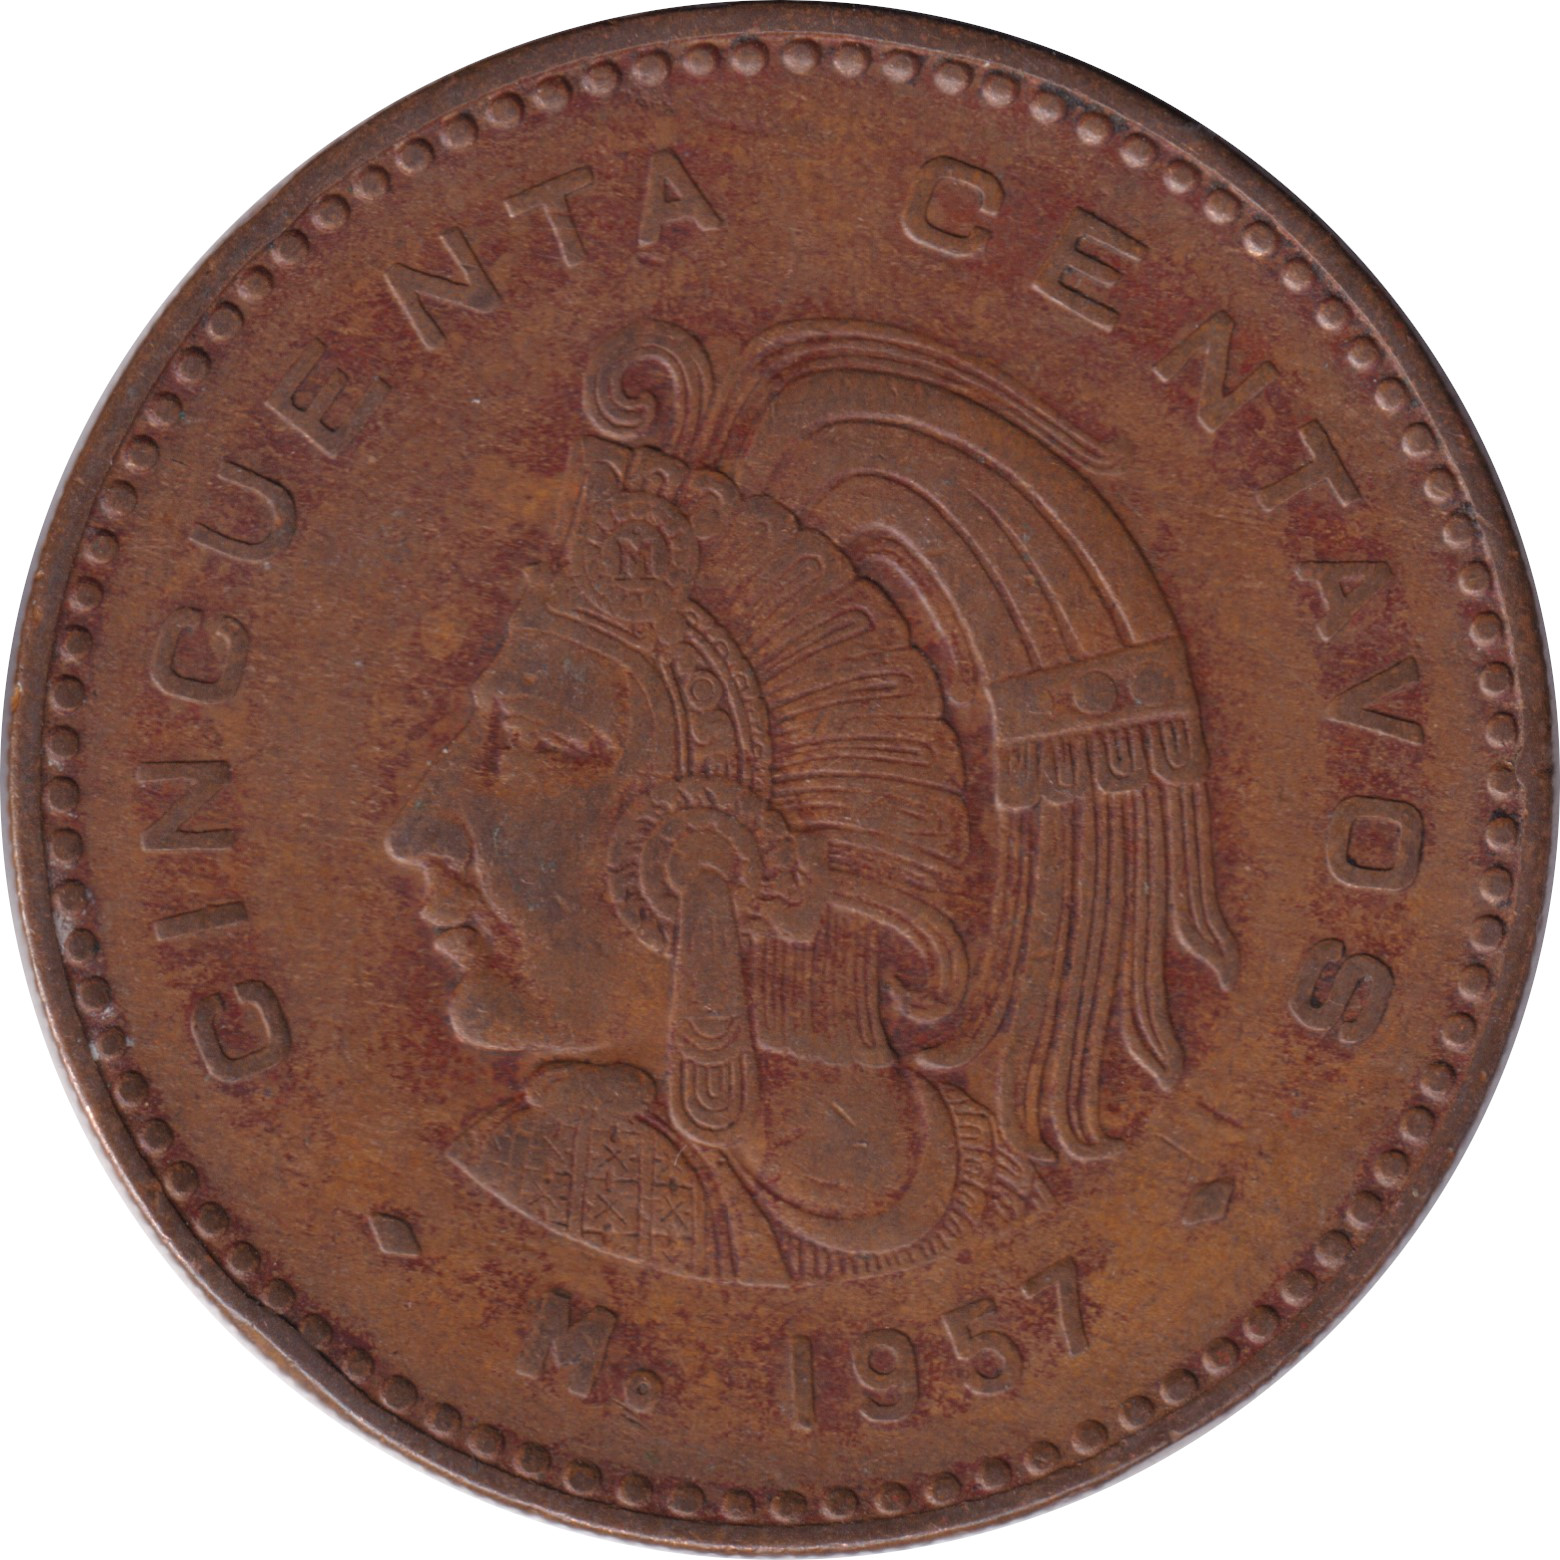 50 centavos - Amérindien de profil - Bronze